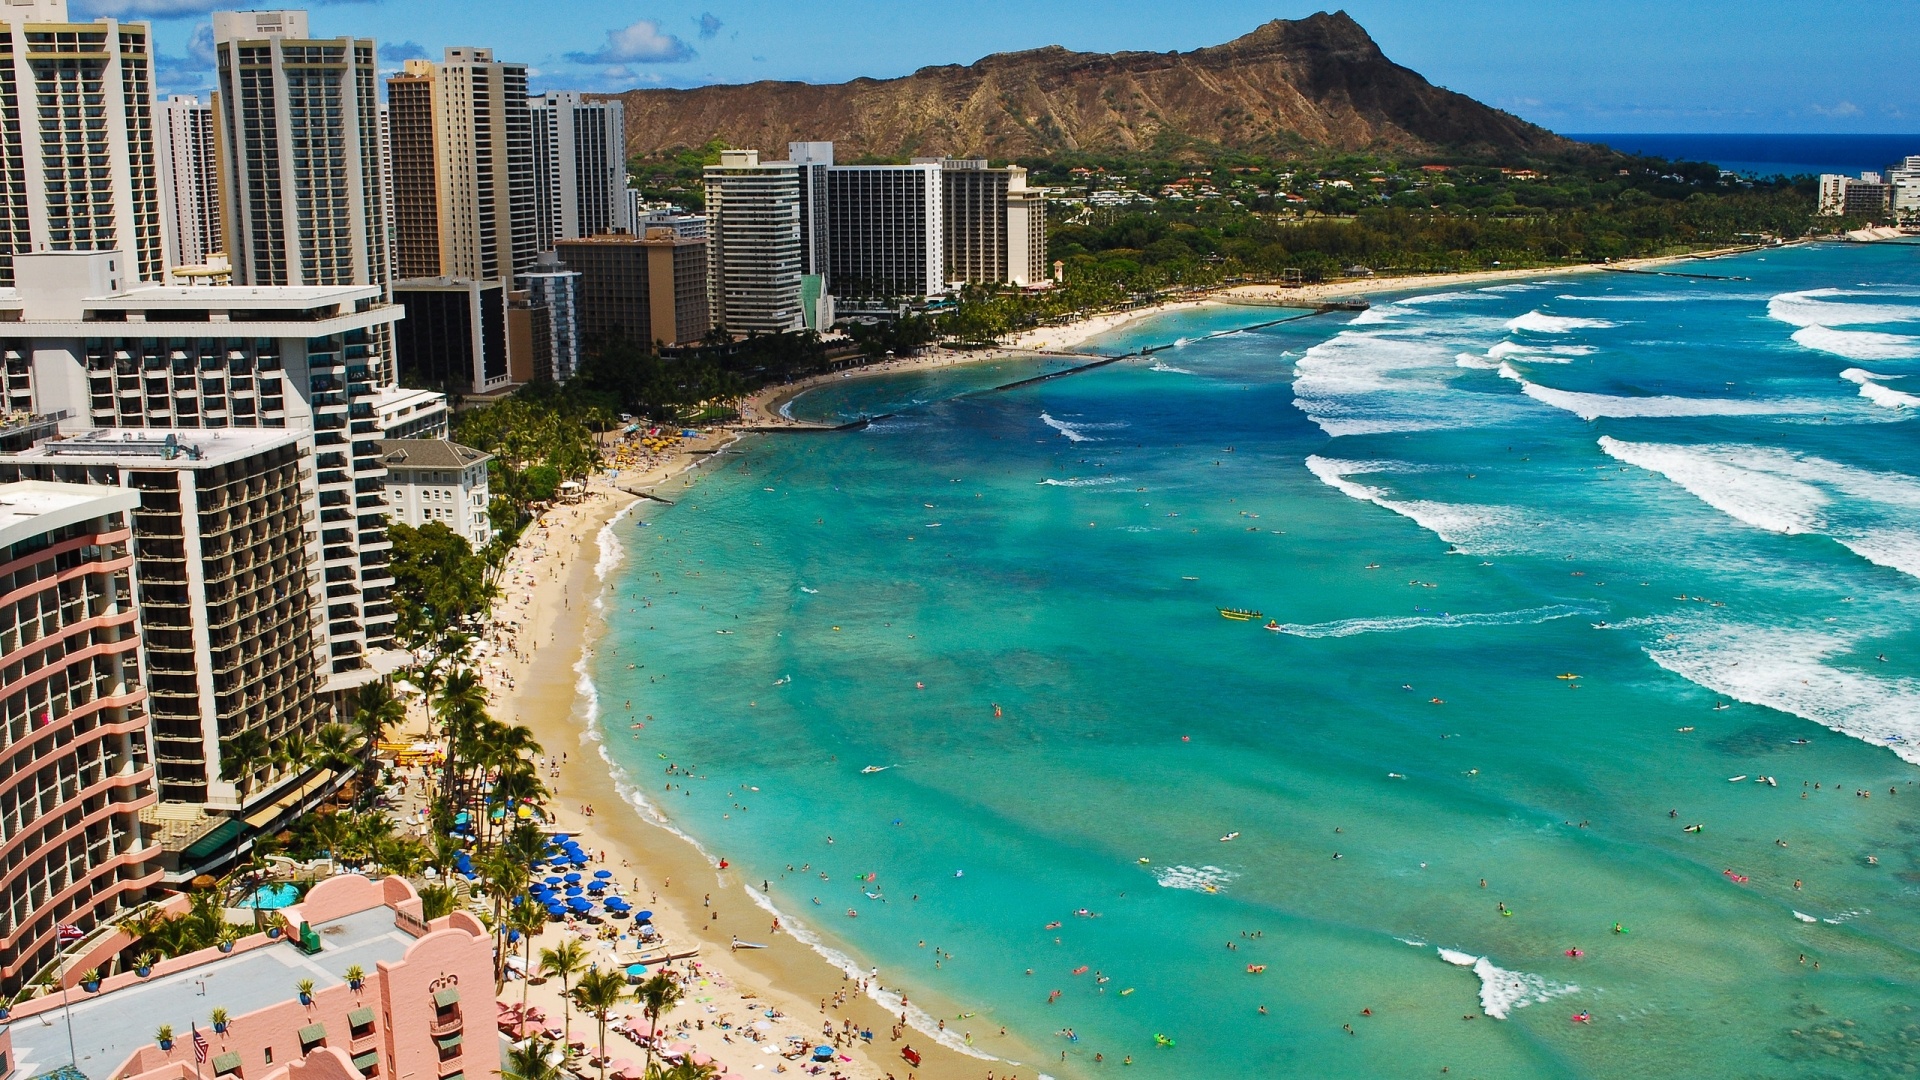 Waikiki beach wallpaper, Desktop HD backgrounds, Free download, Stunning coastal views, 1920x1080 Full HD Desktop